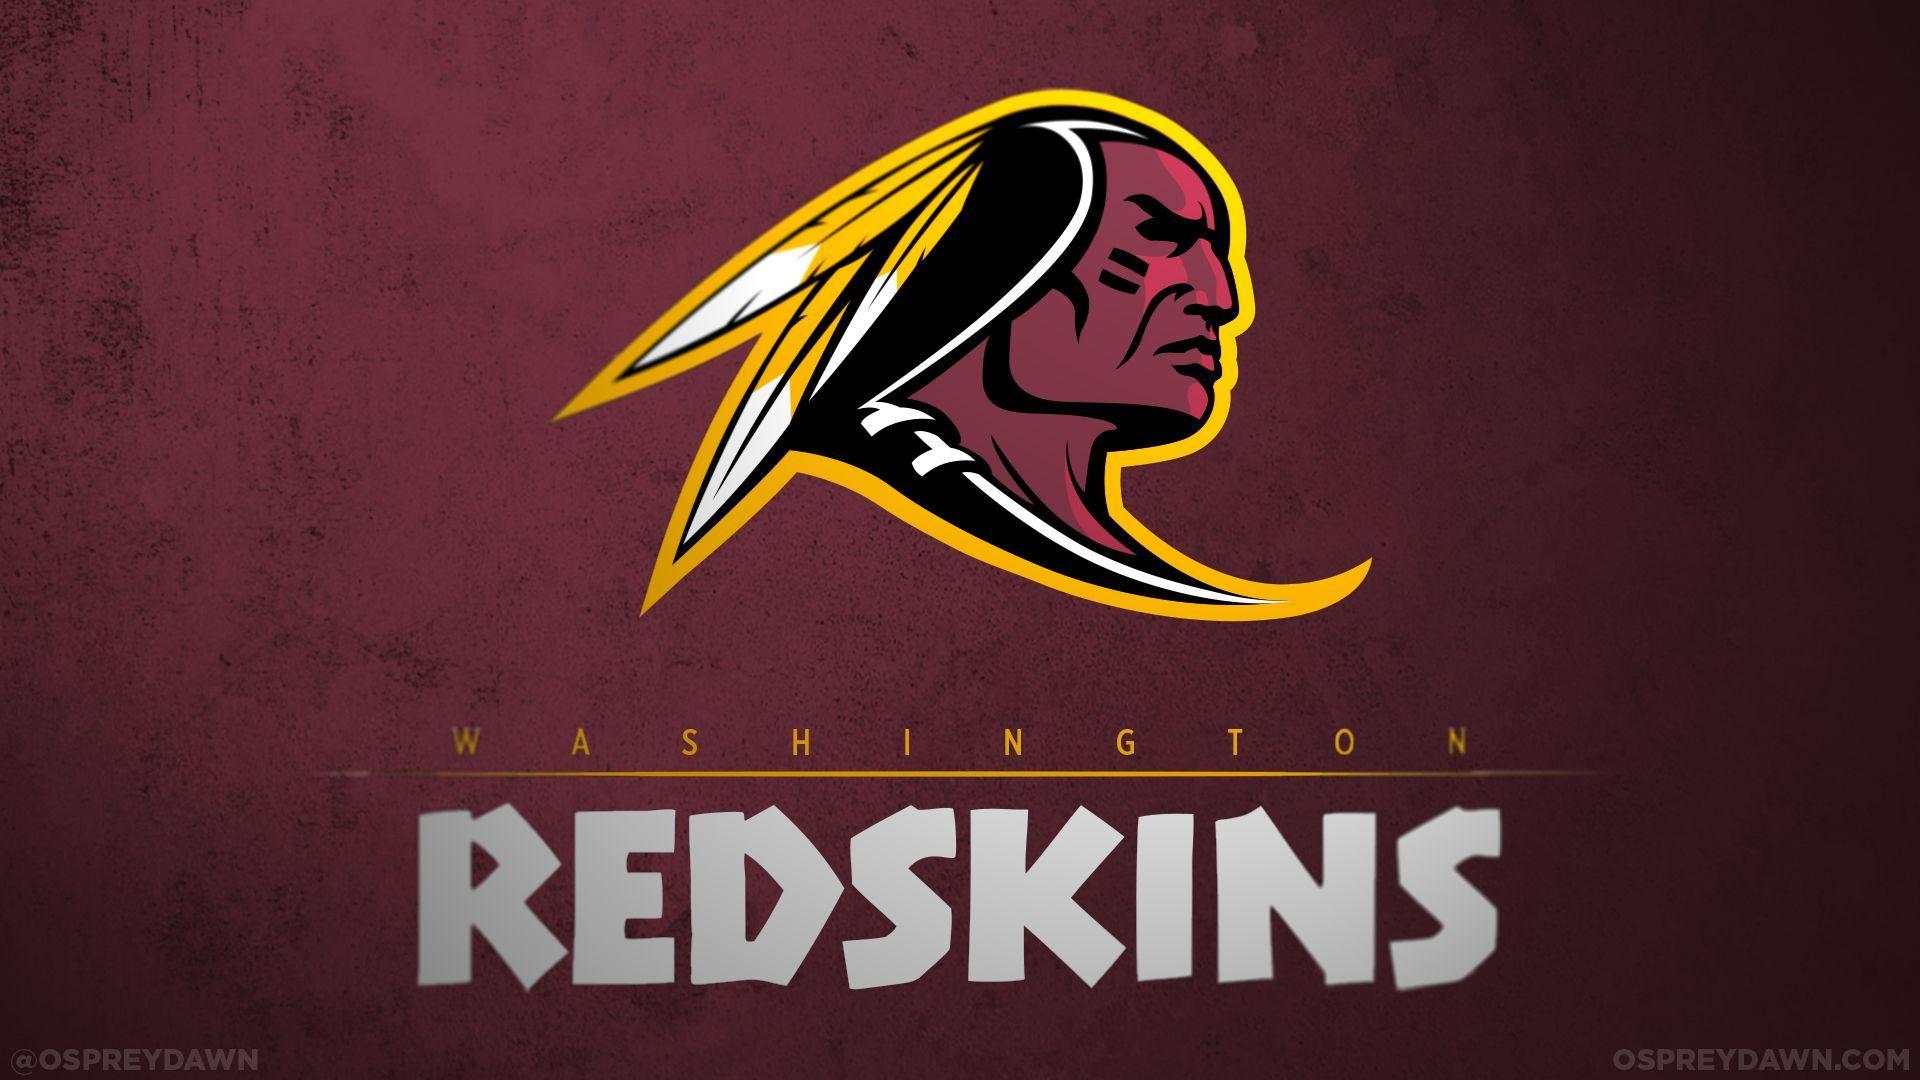 Redskins New Logo - Washington Redskins Logo Change. Washington Redskins Name Change